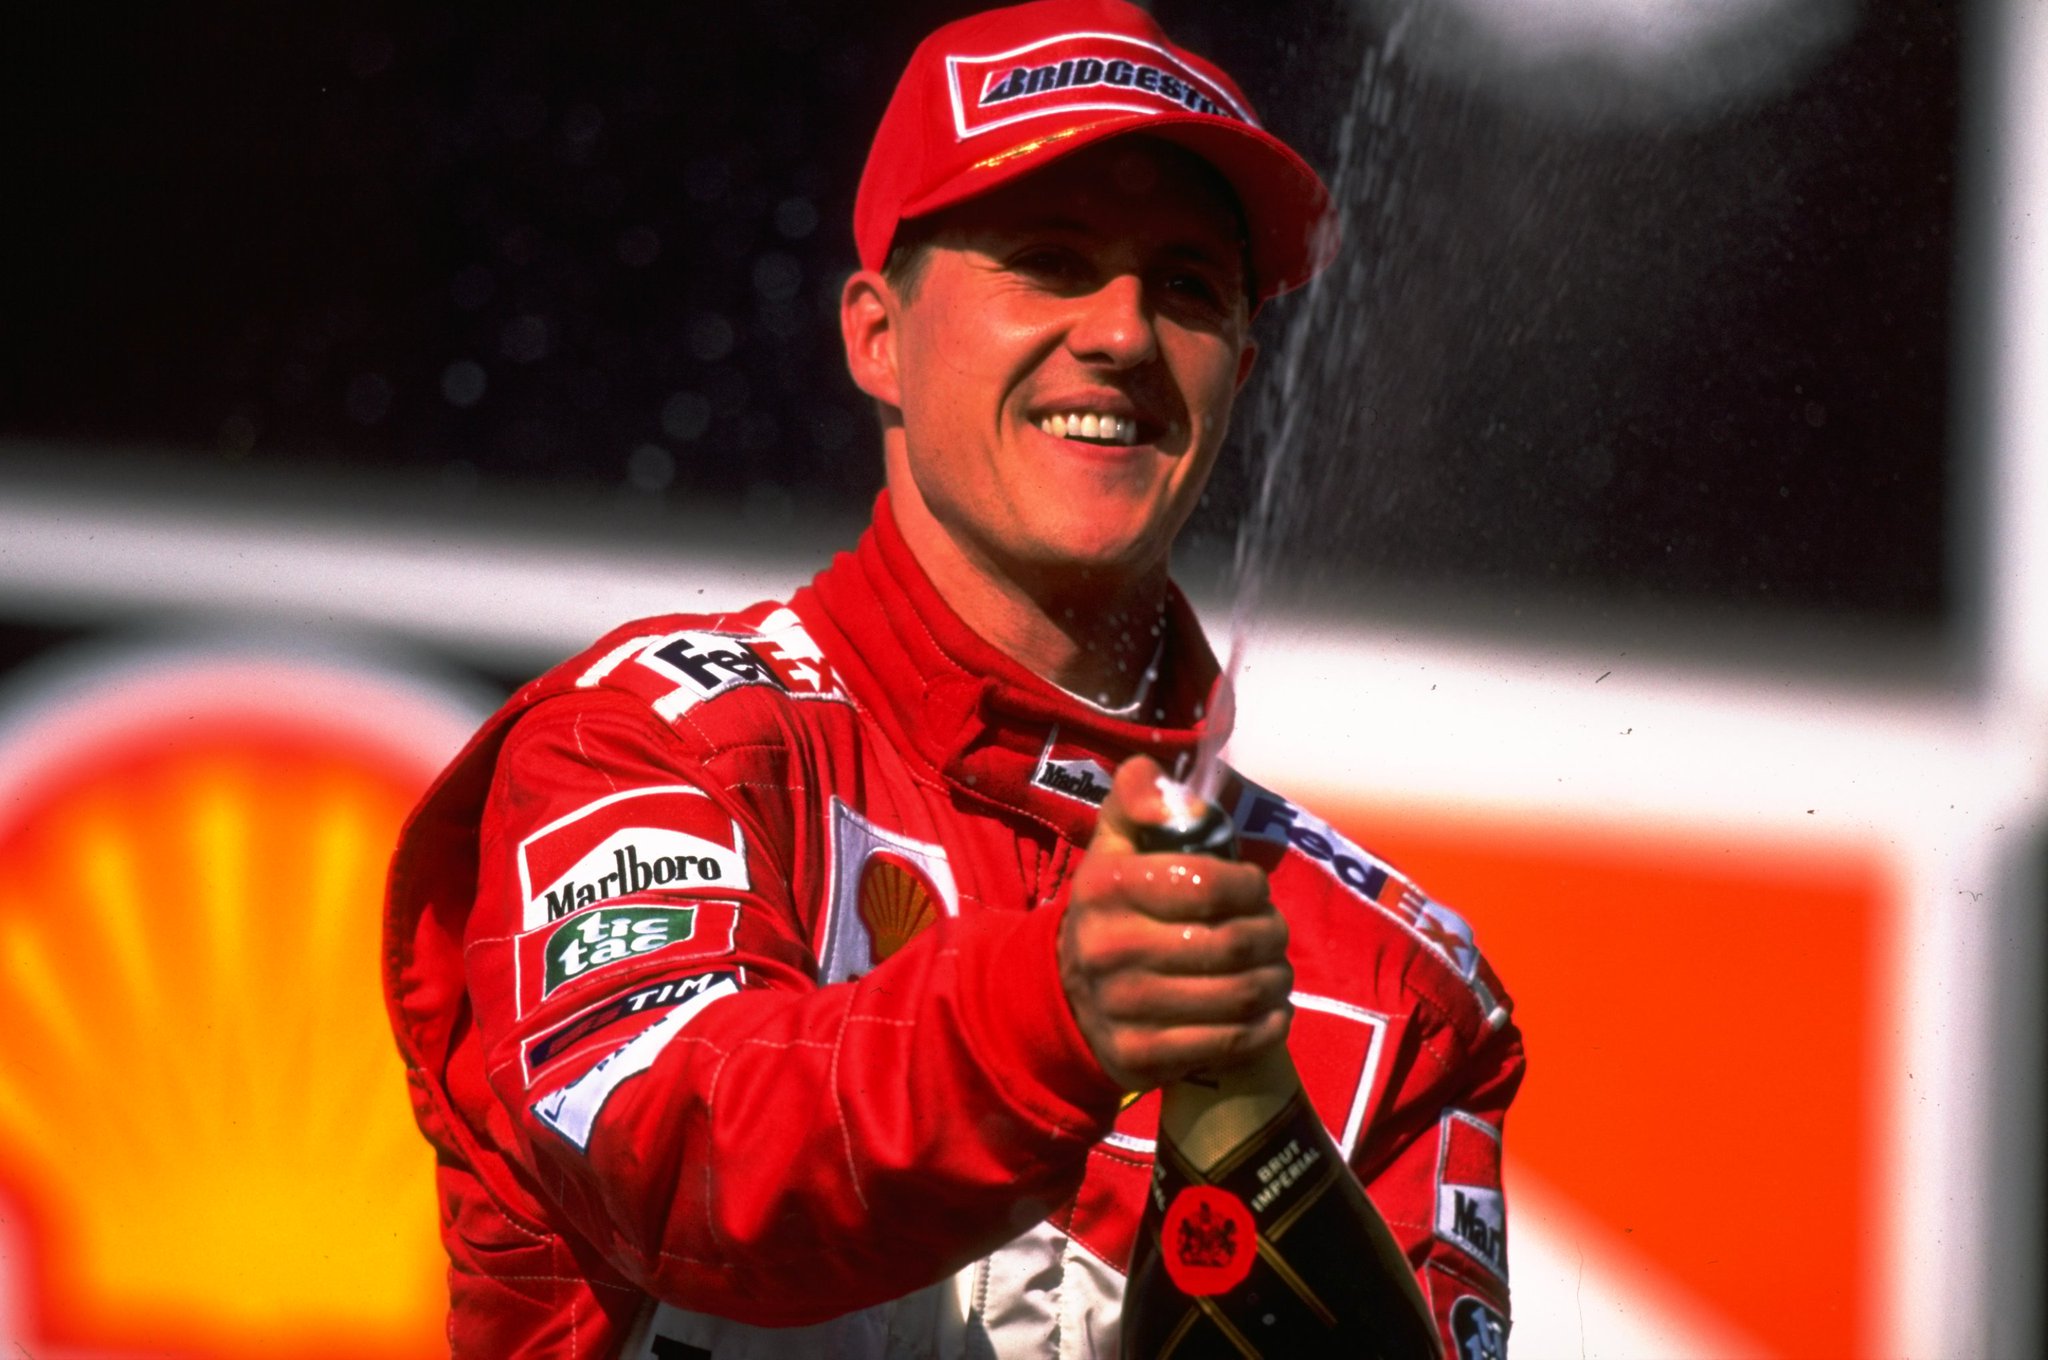 Happy birthday to seven-time world champion Michael Schumacher.

Keep fighting, Michael. 